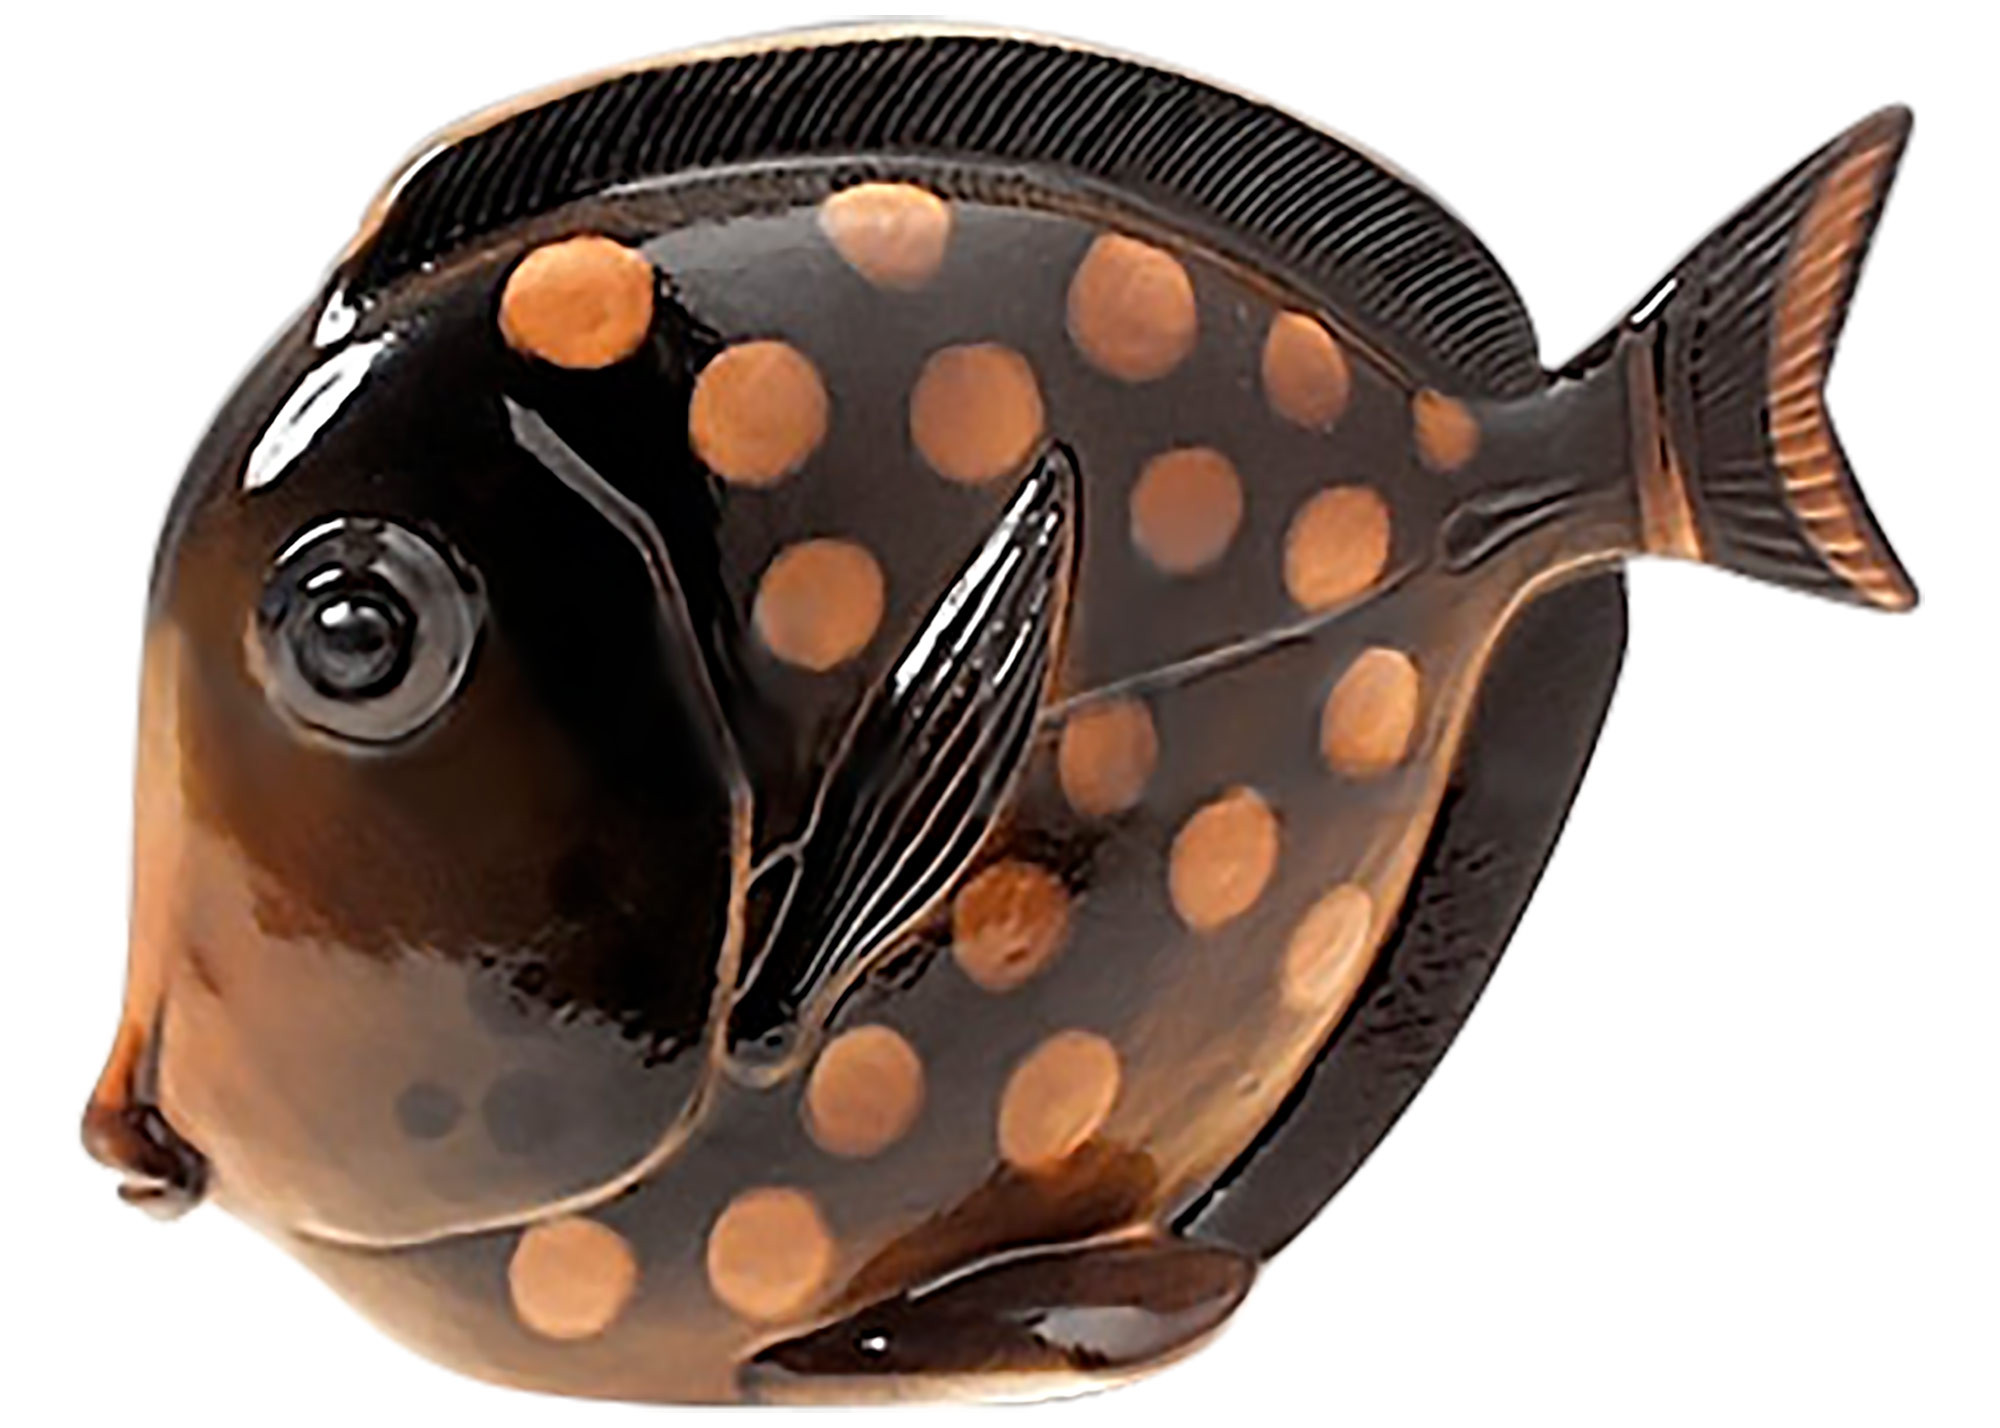 This Lomonosov porcelain Fish figurine provides you with the